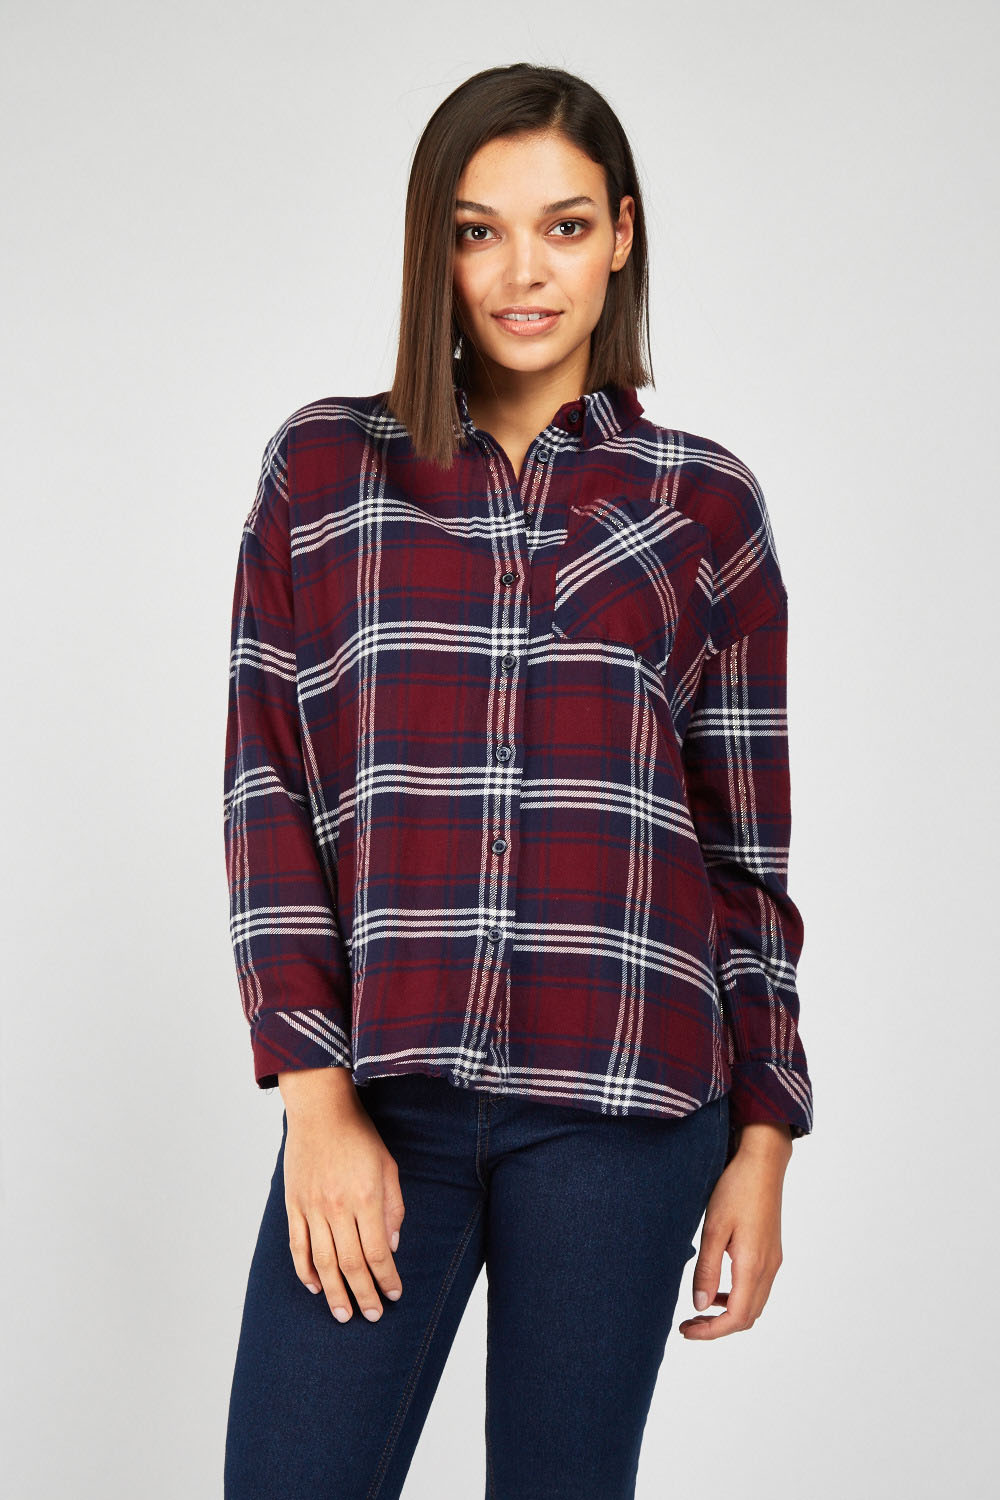 Metallic Thread Insert Flannel Shirt - Just $7